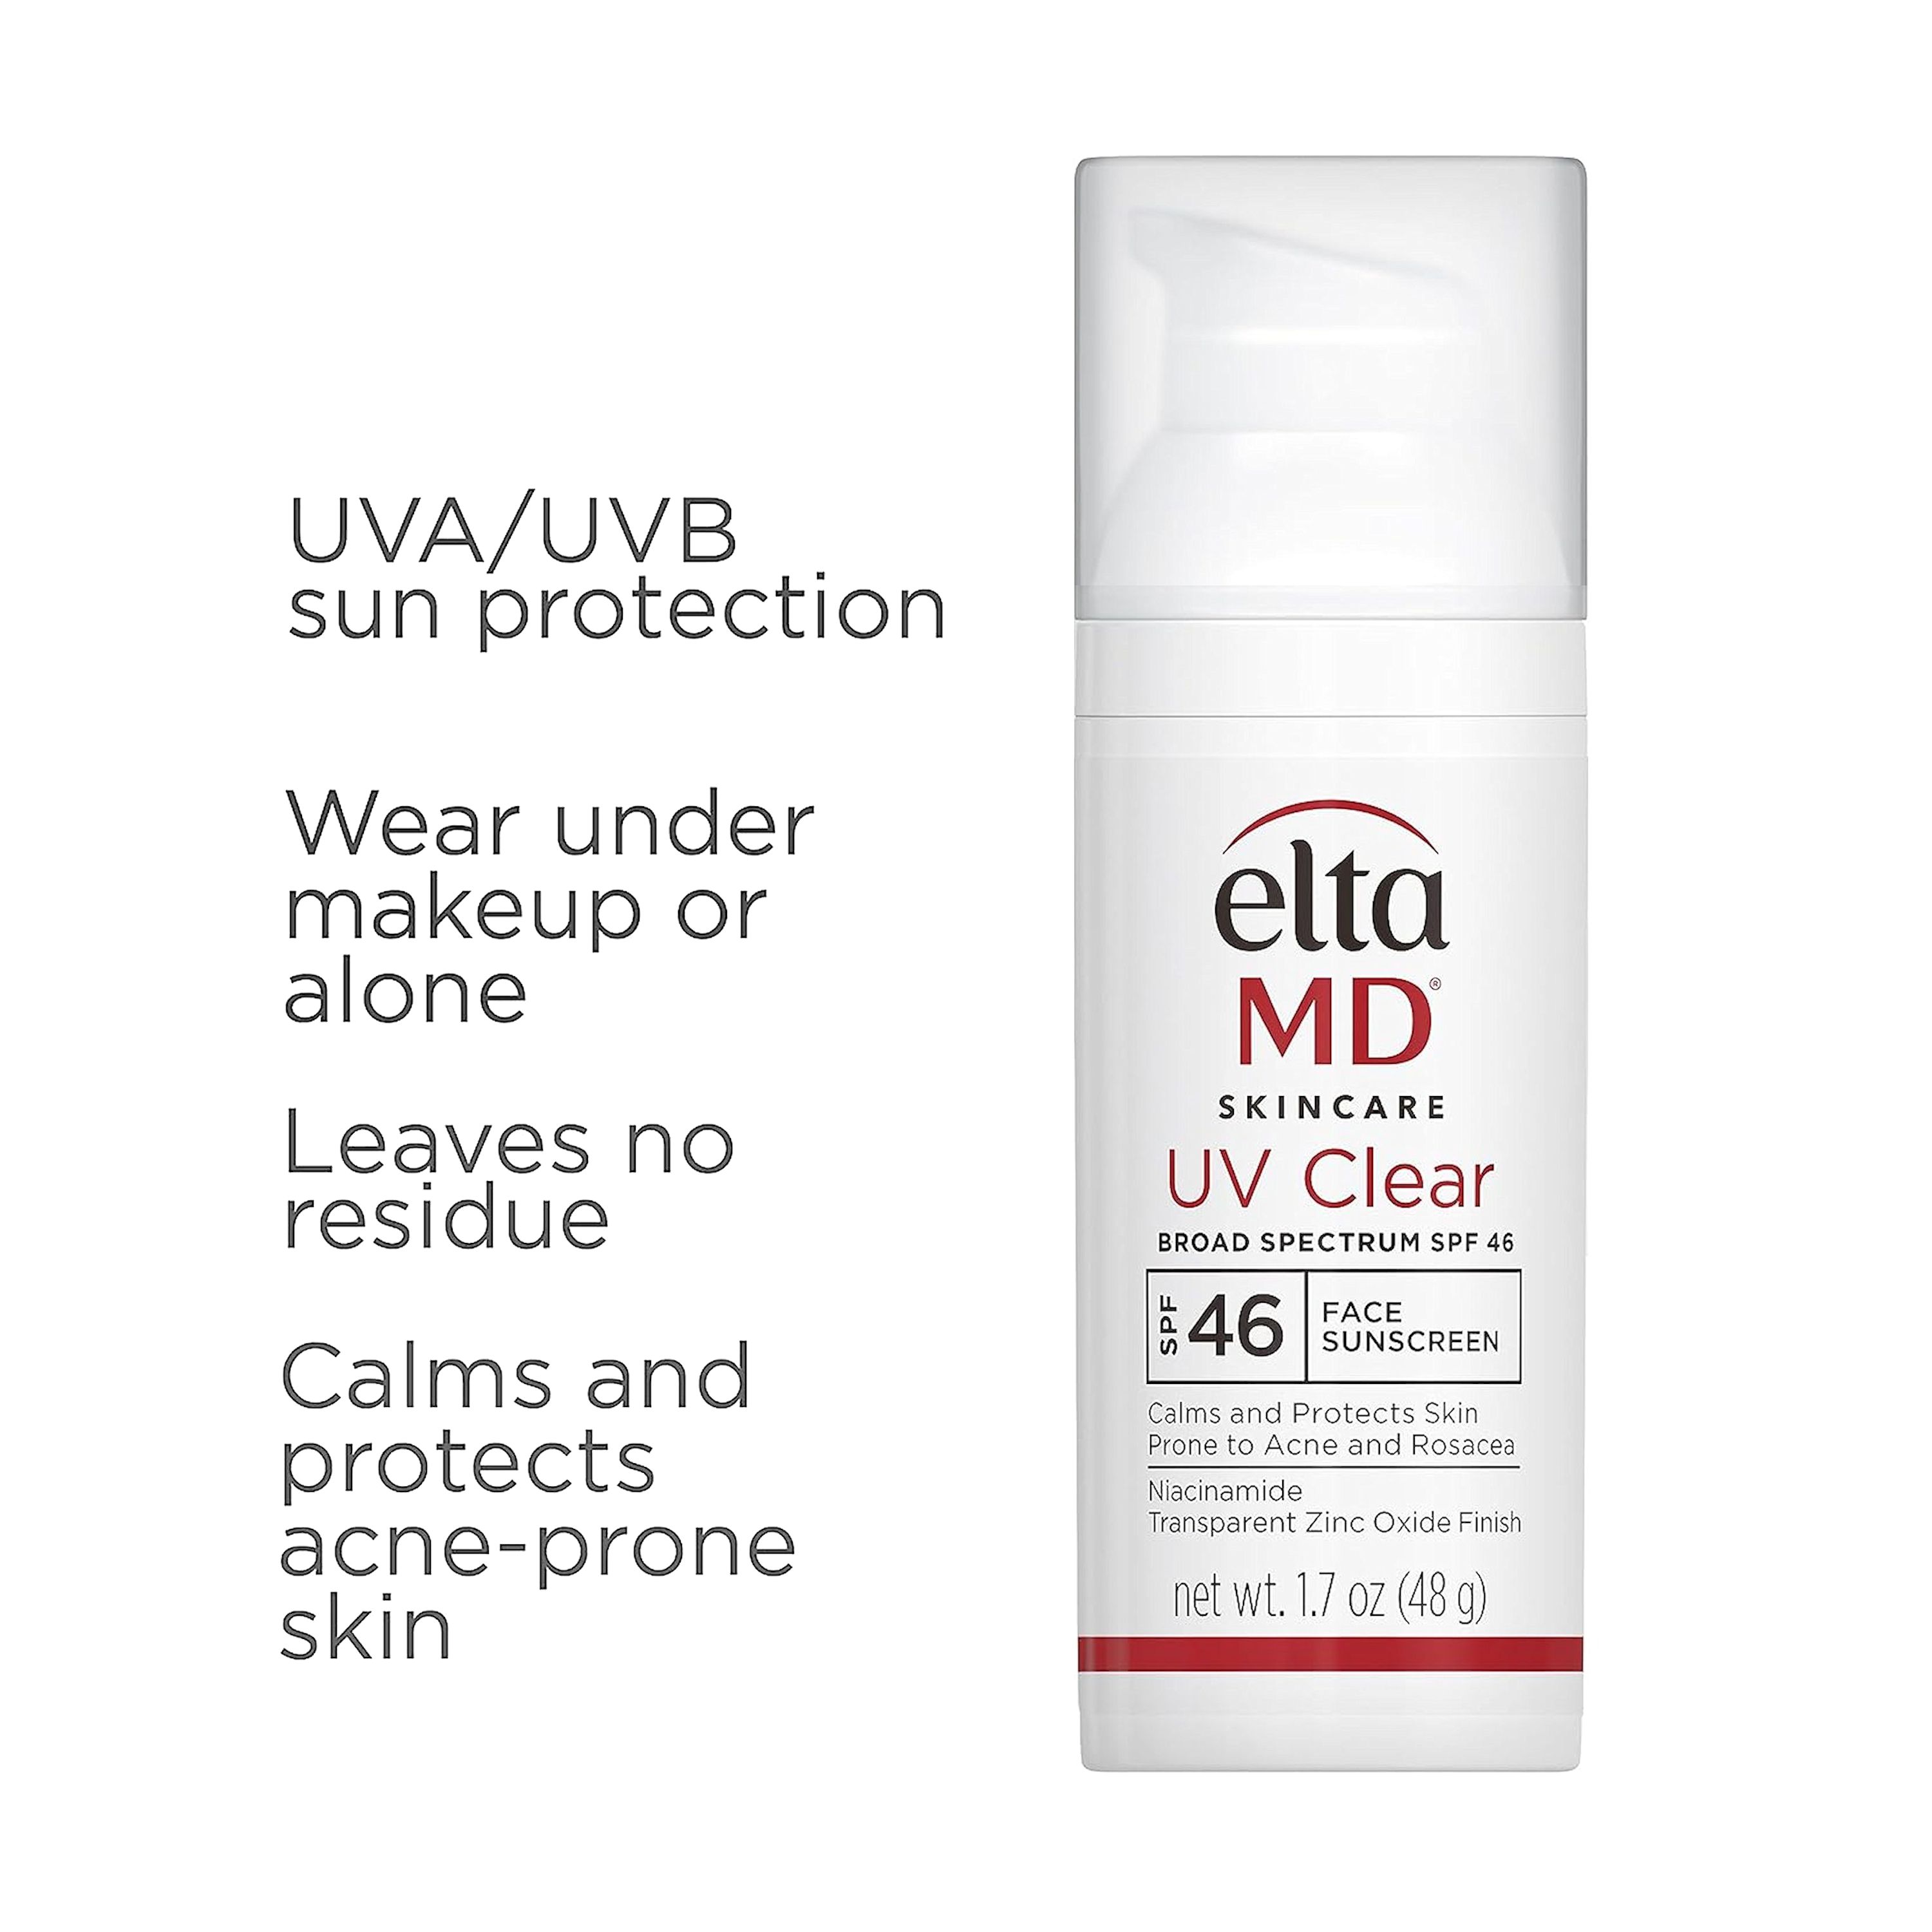 EltaMD UV Clear SPF 46 Broad Spectrum Moisturizing Facial Sunscreen 1.7 oz (48g) - image 5 of 6